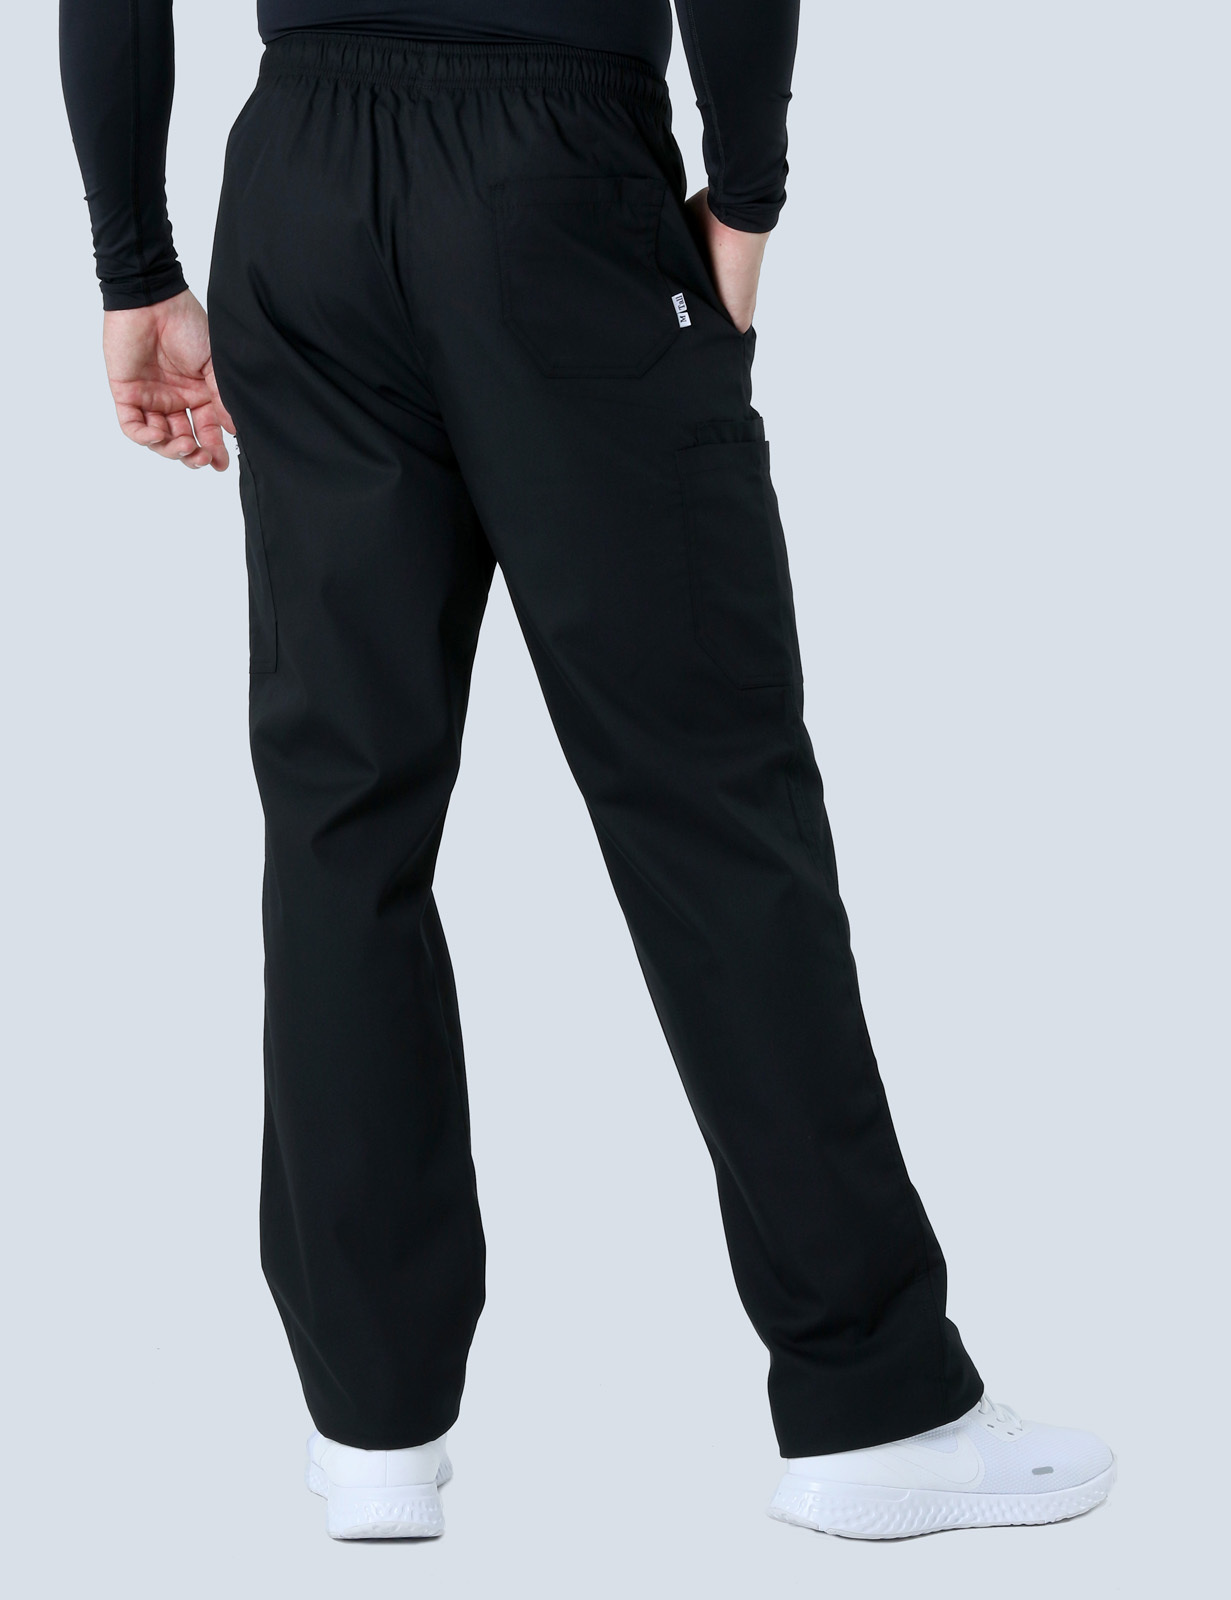 Men's Cargo Performance Pants - Black - 3X Large - 4